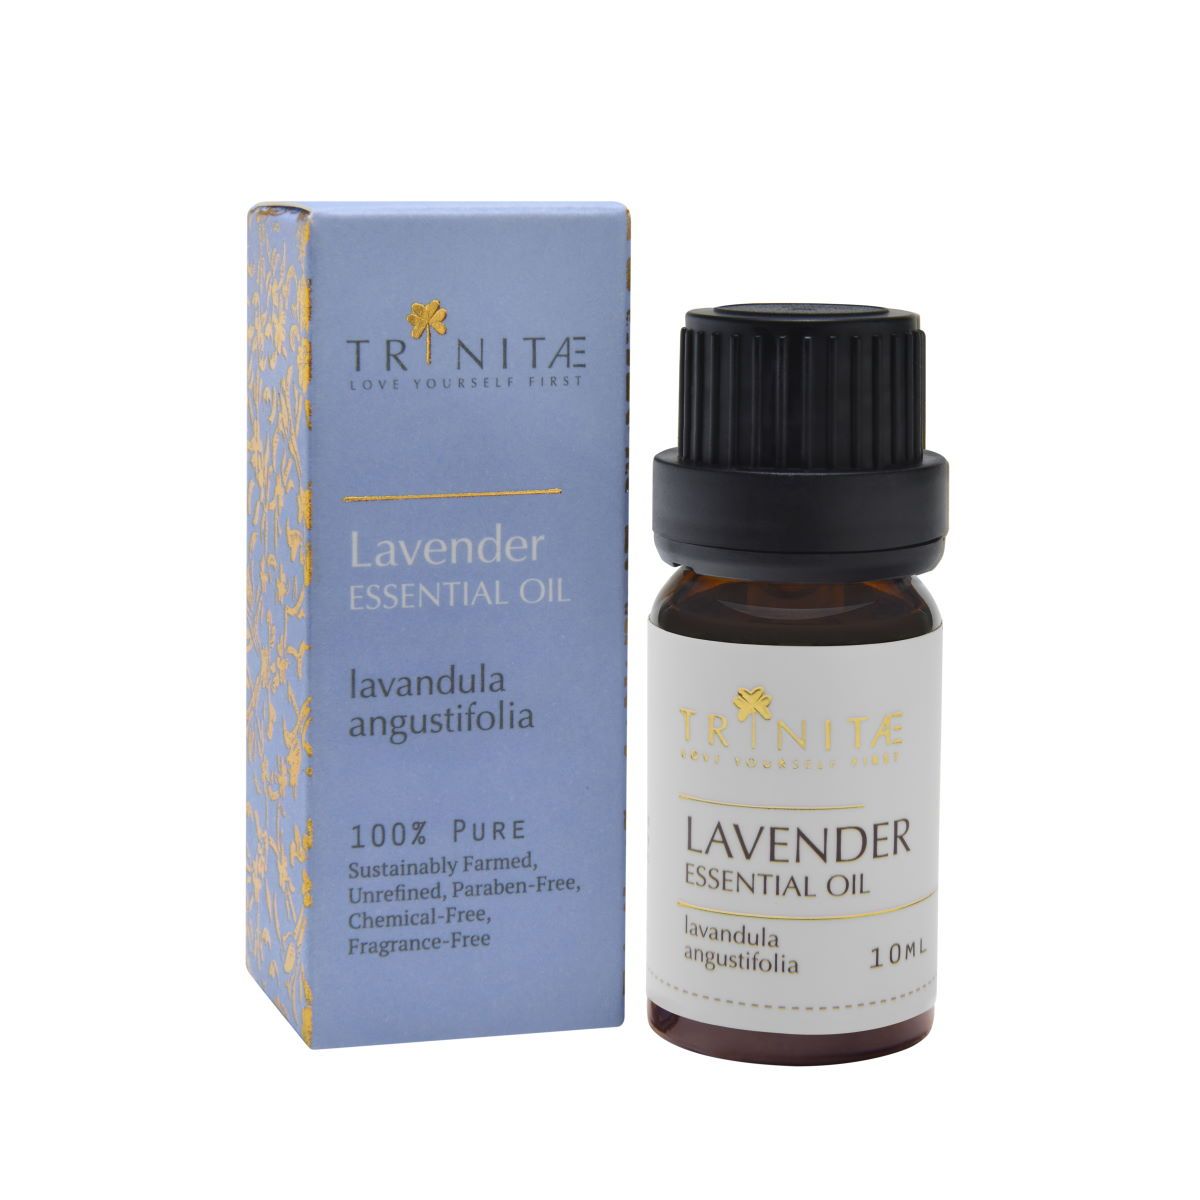 Lavender Essential Oil Lavendula angustifolia